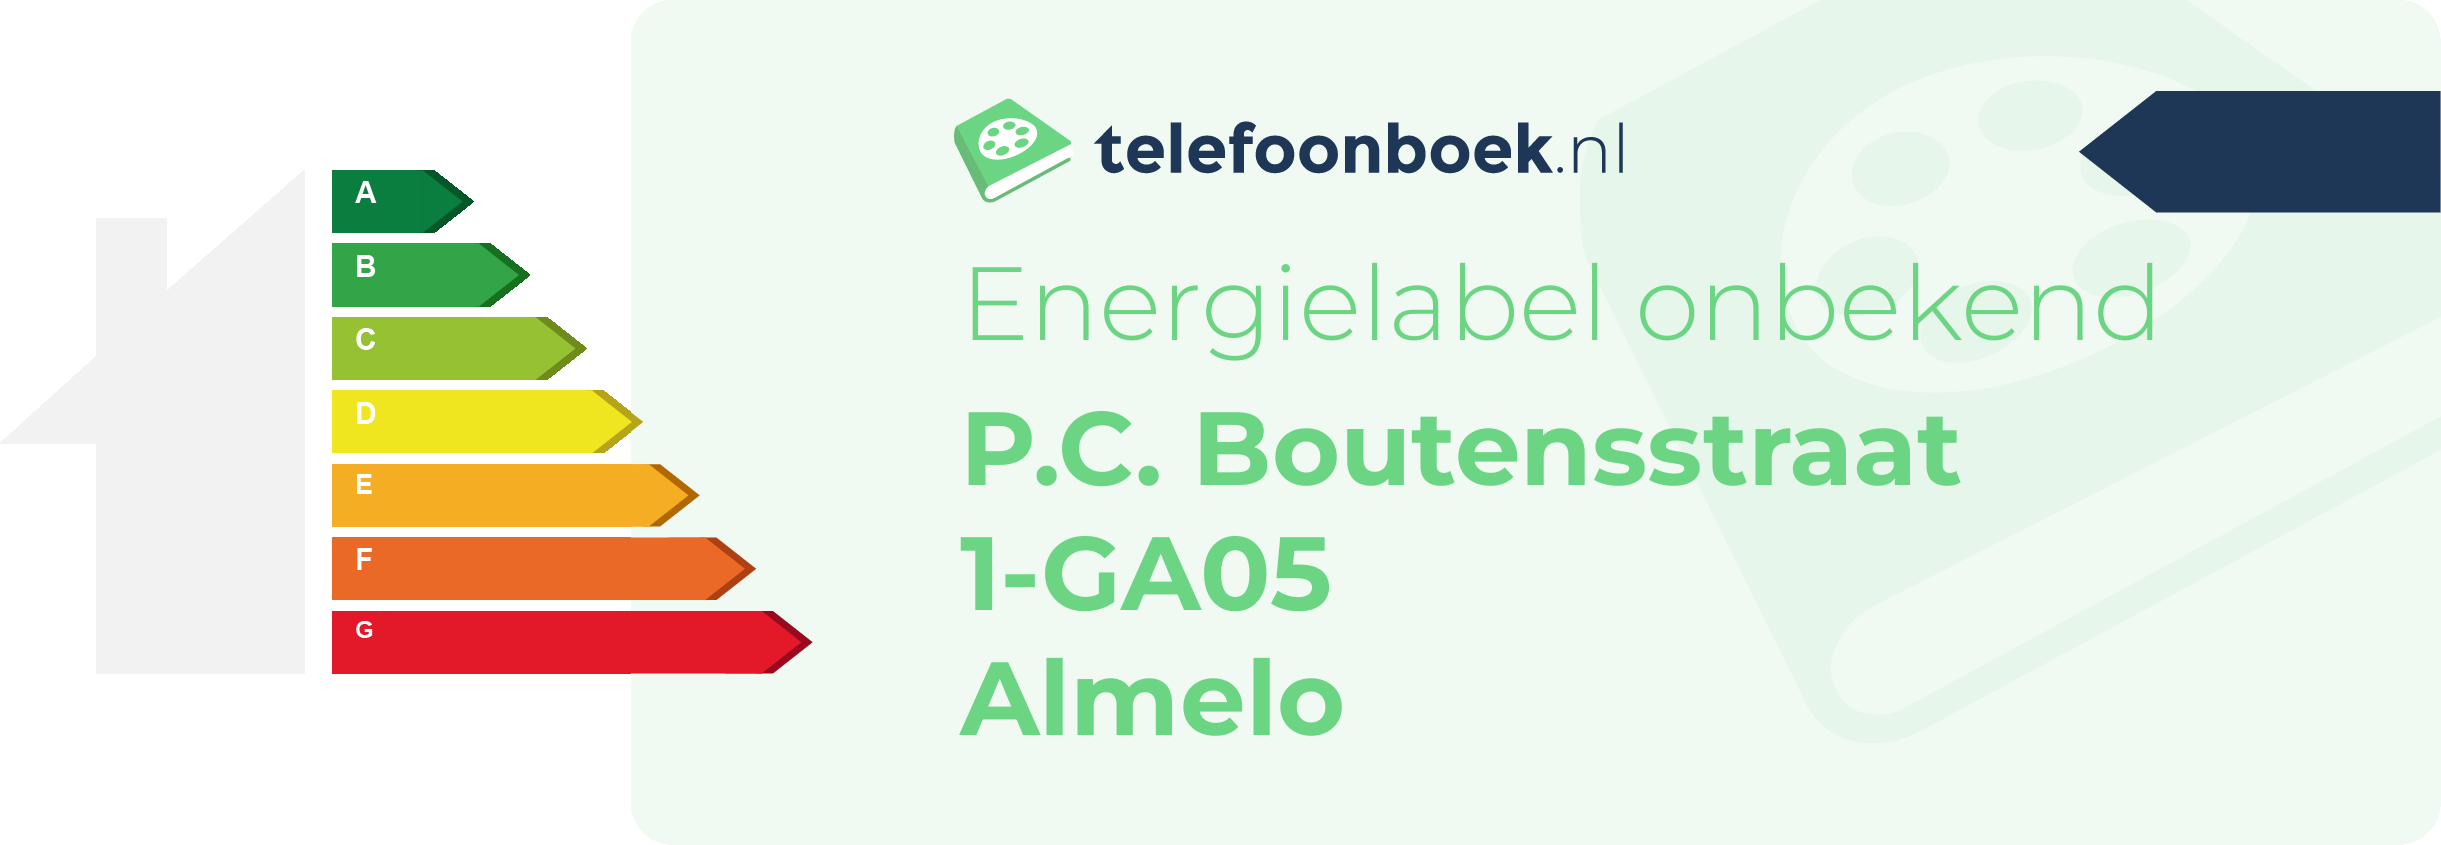 Energielabel P.C. Boutensstraat 1-GA05 Almelo